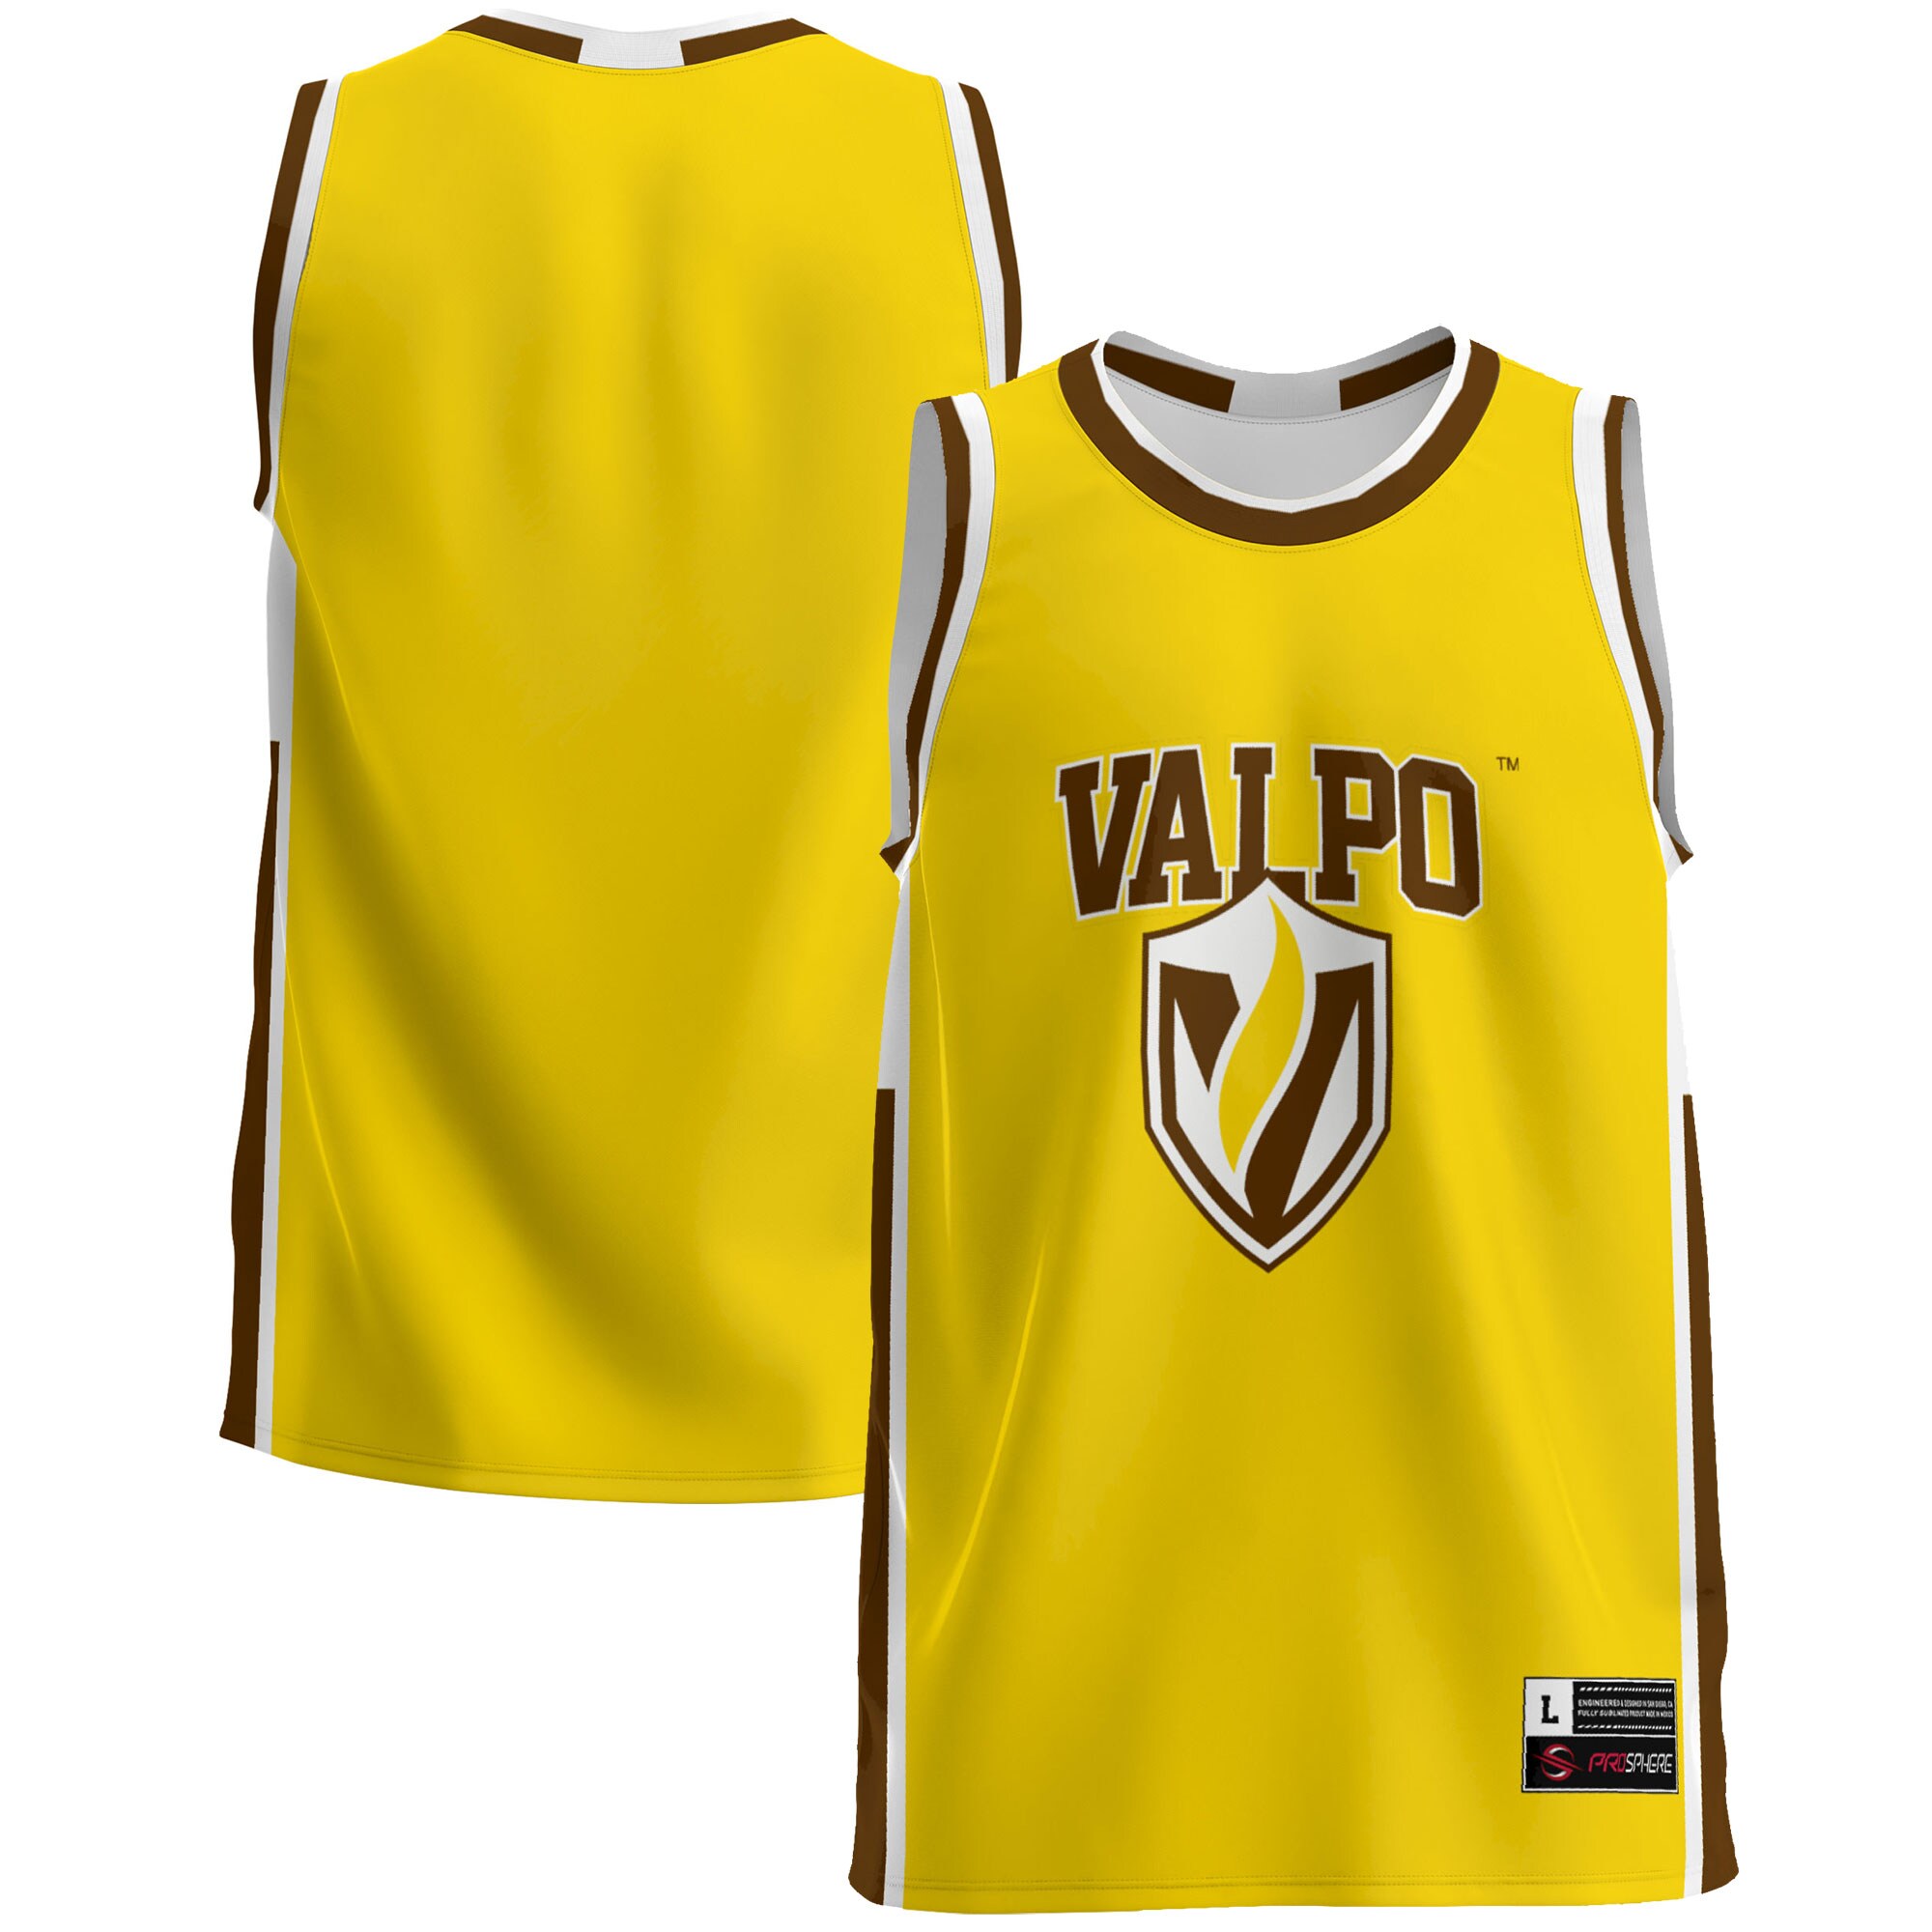 Valparaiso Beacons Basketball Jersey - Gold For Youth Women Men